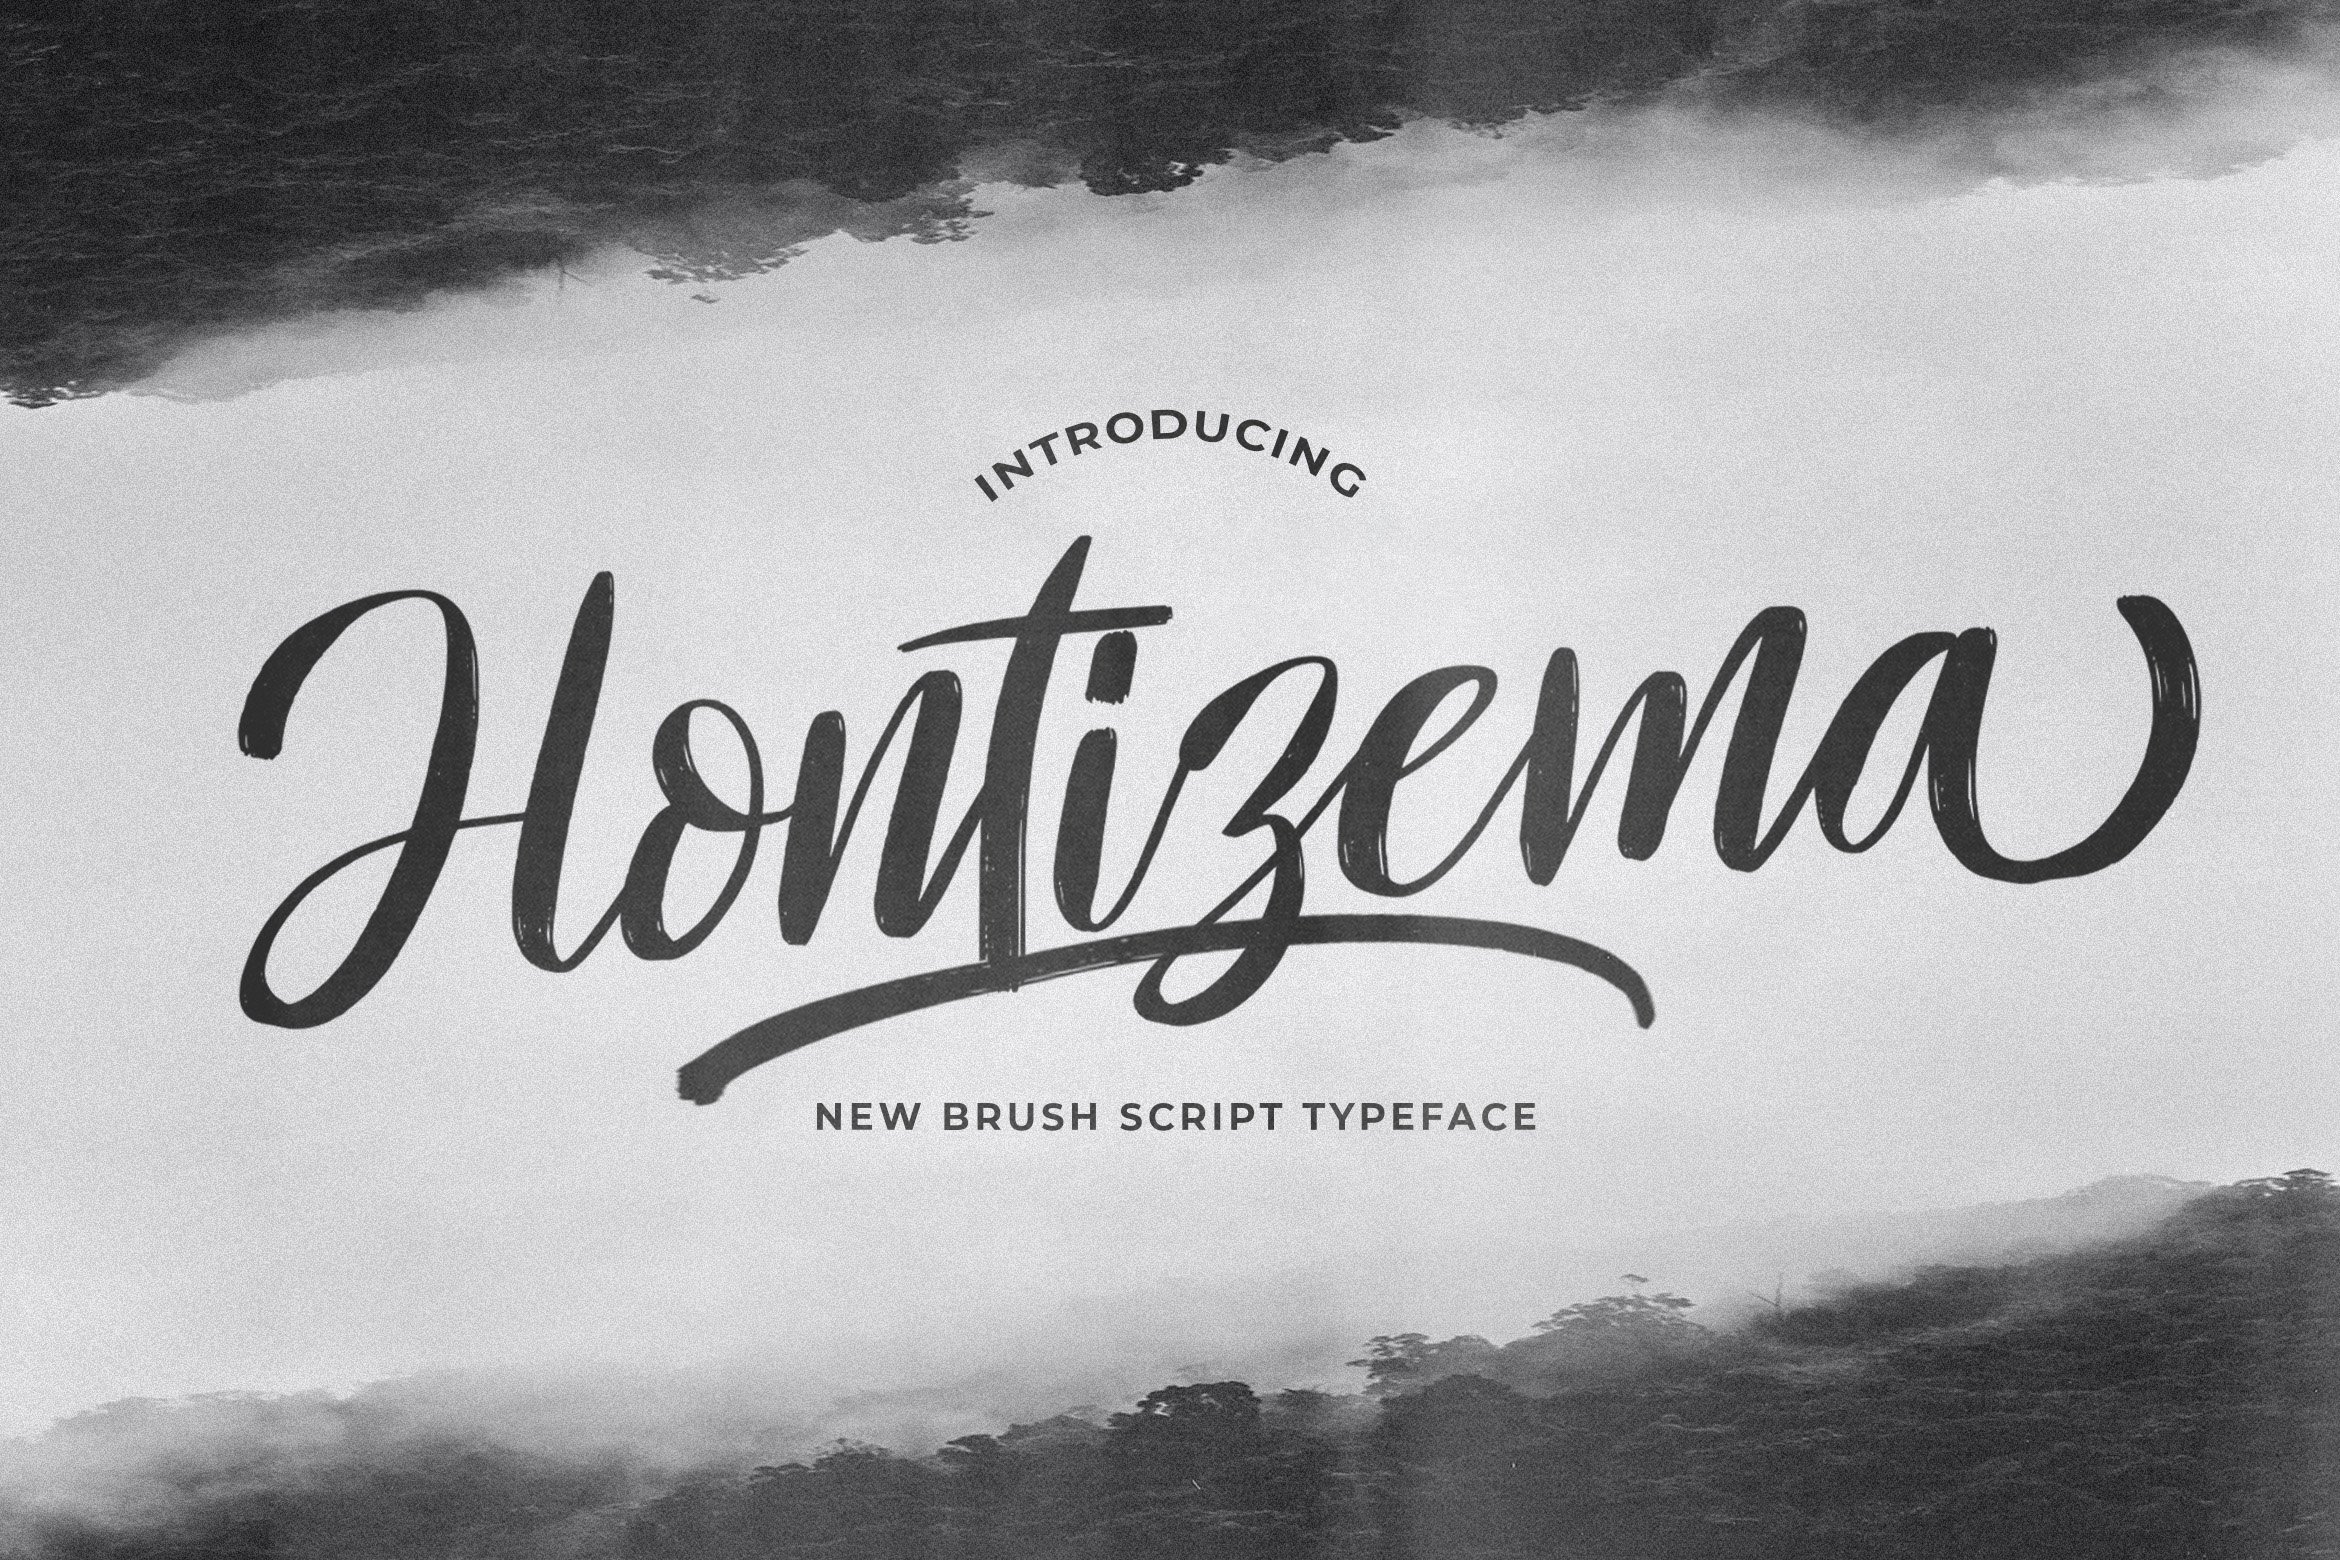 Hontizema - Handwritten Font cover image.